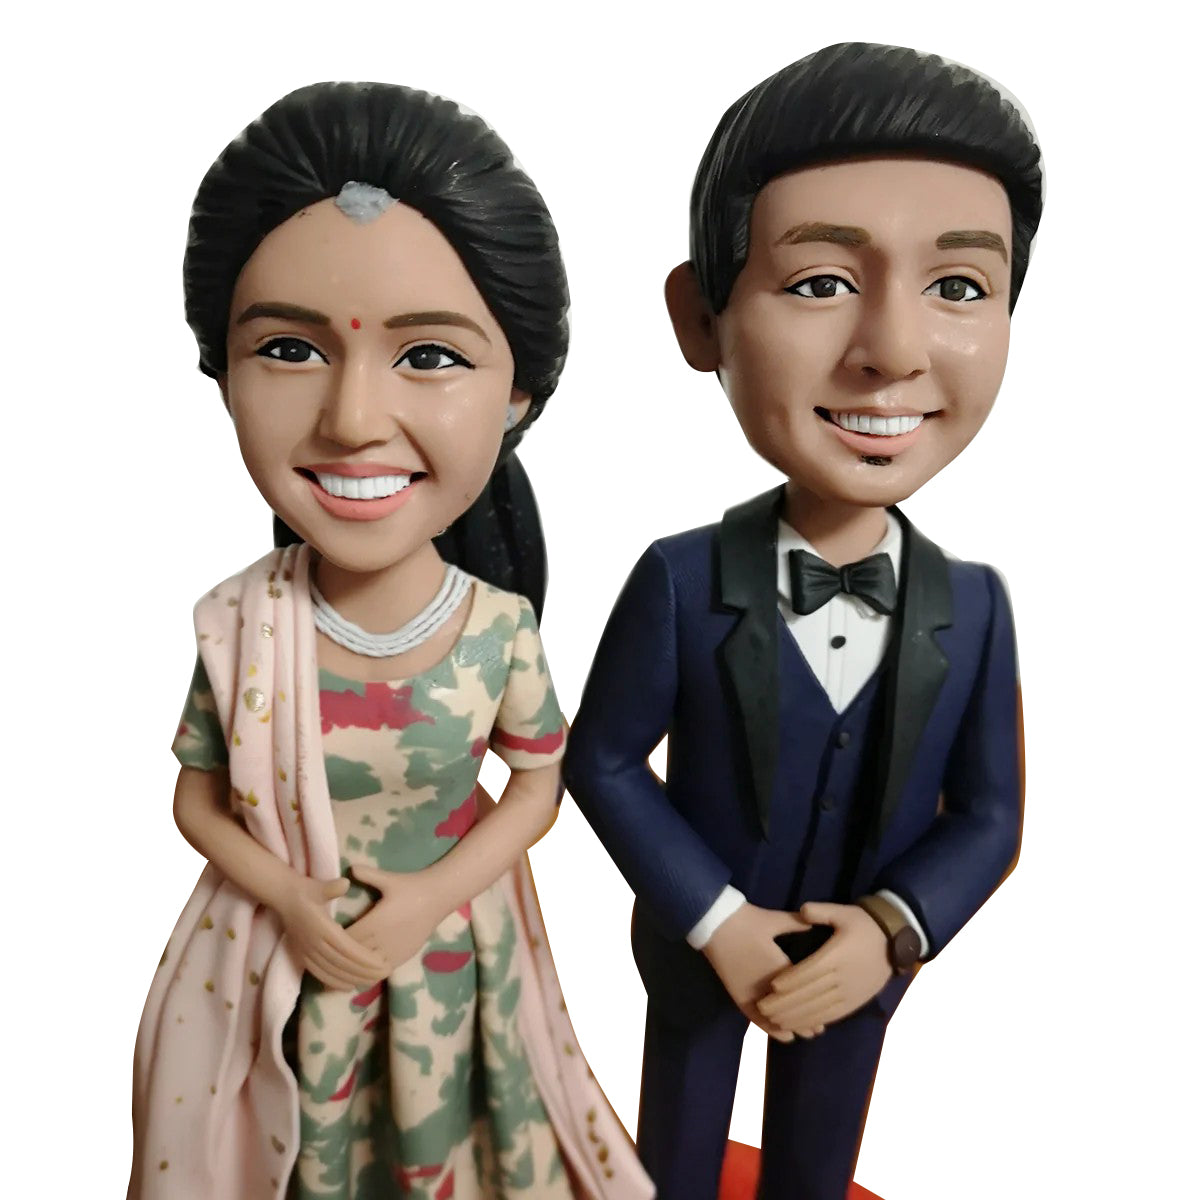 Personalized Indian Wedding Couple Bobbleheads